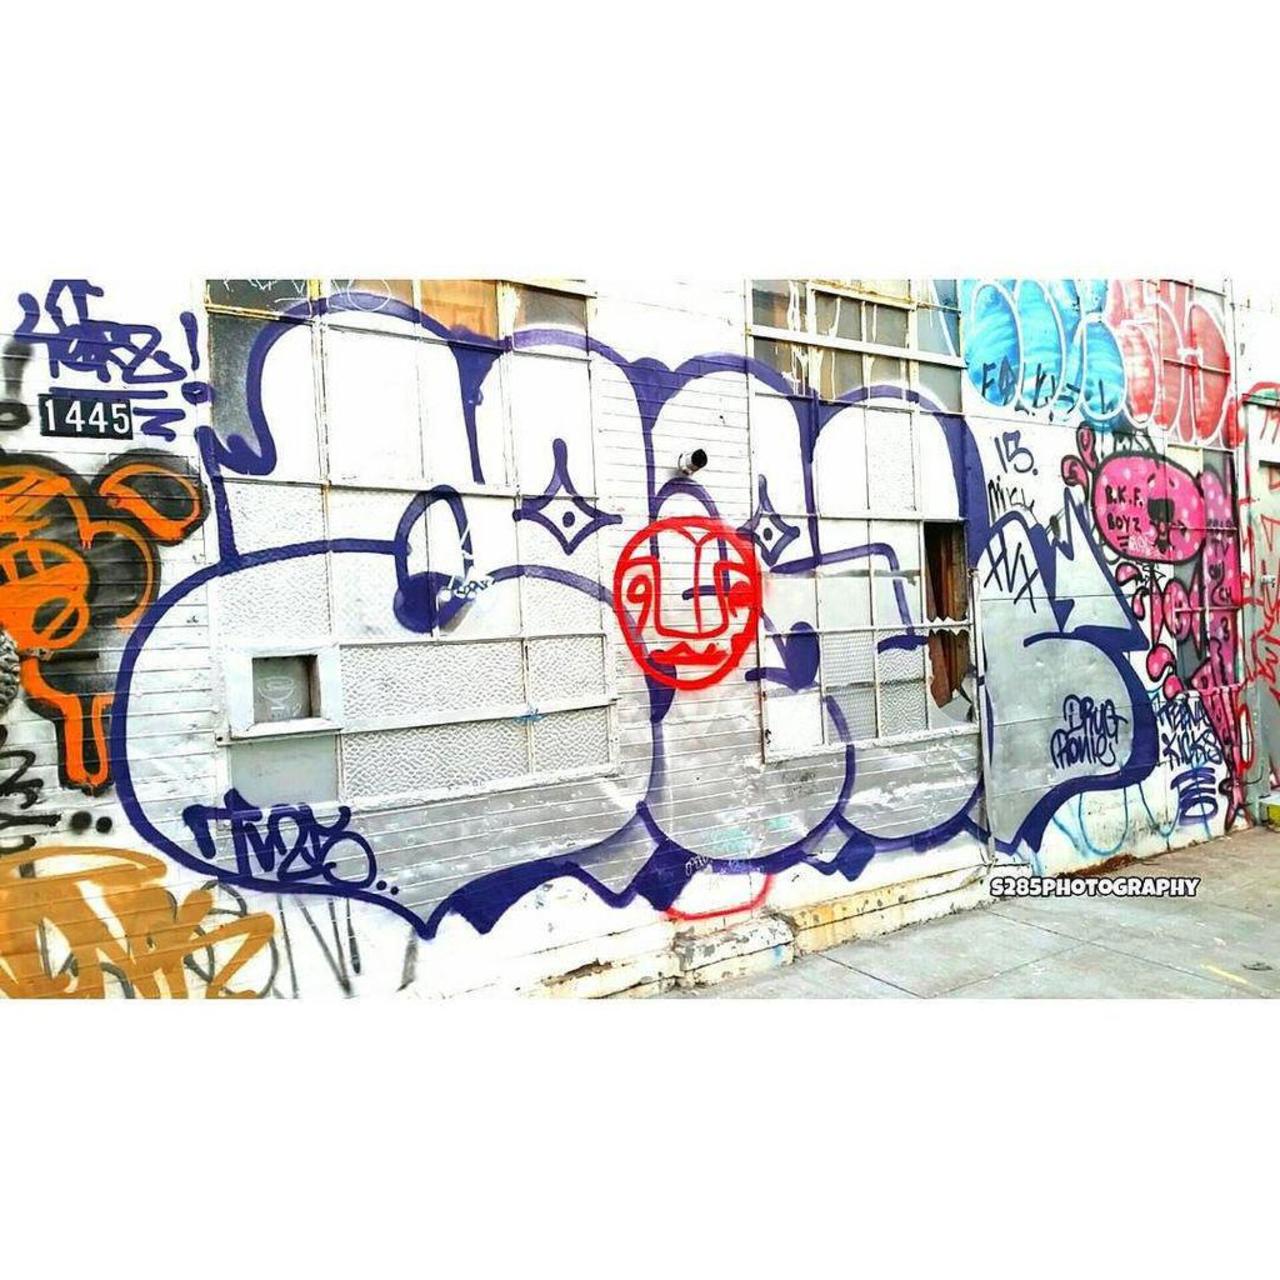 RT @artpushr: via #fresh2defart "http://ift.tt/1YKzsBb" #graffiti #streetart http://t.co/M2aIUsajBv